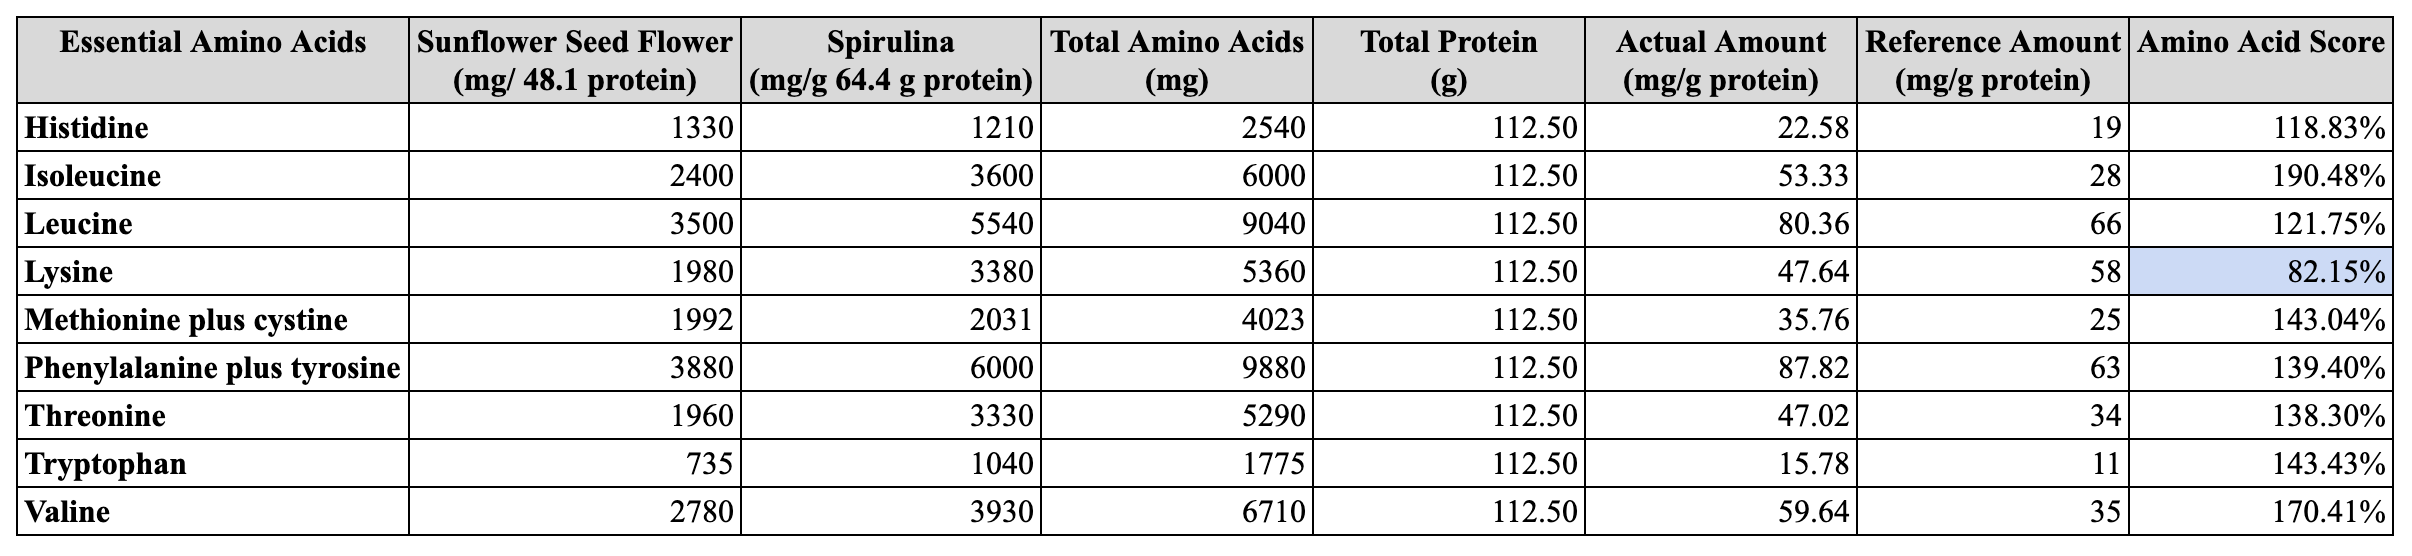 Amino Acid Score Calculation